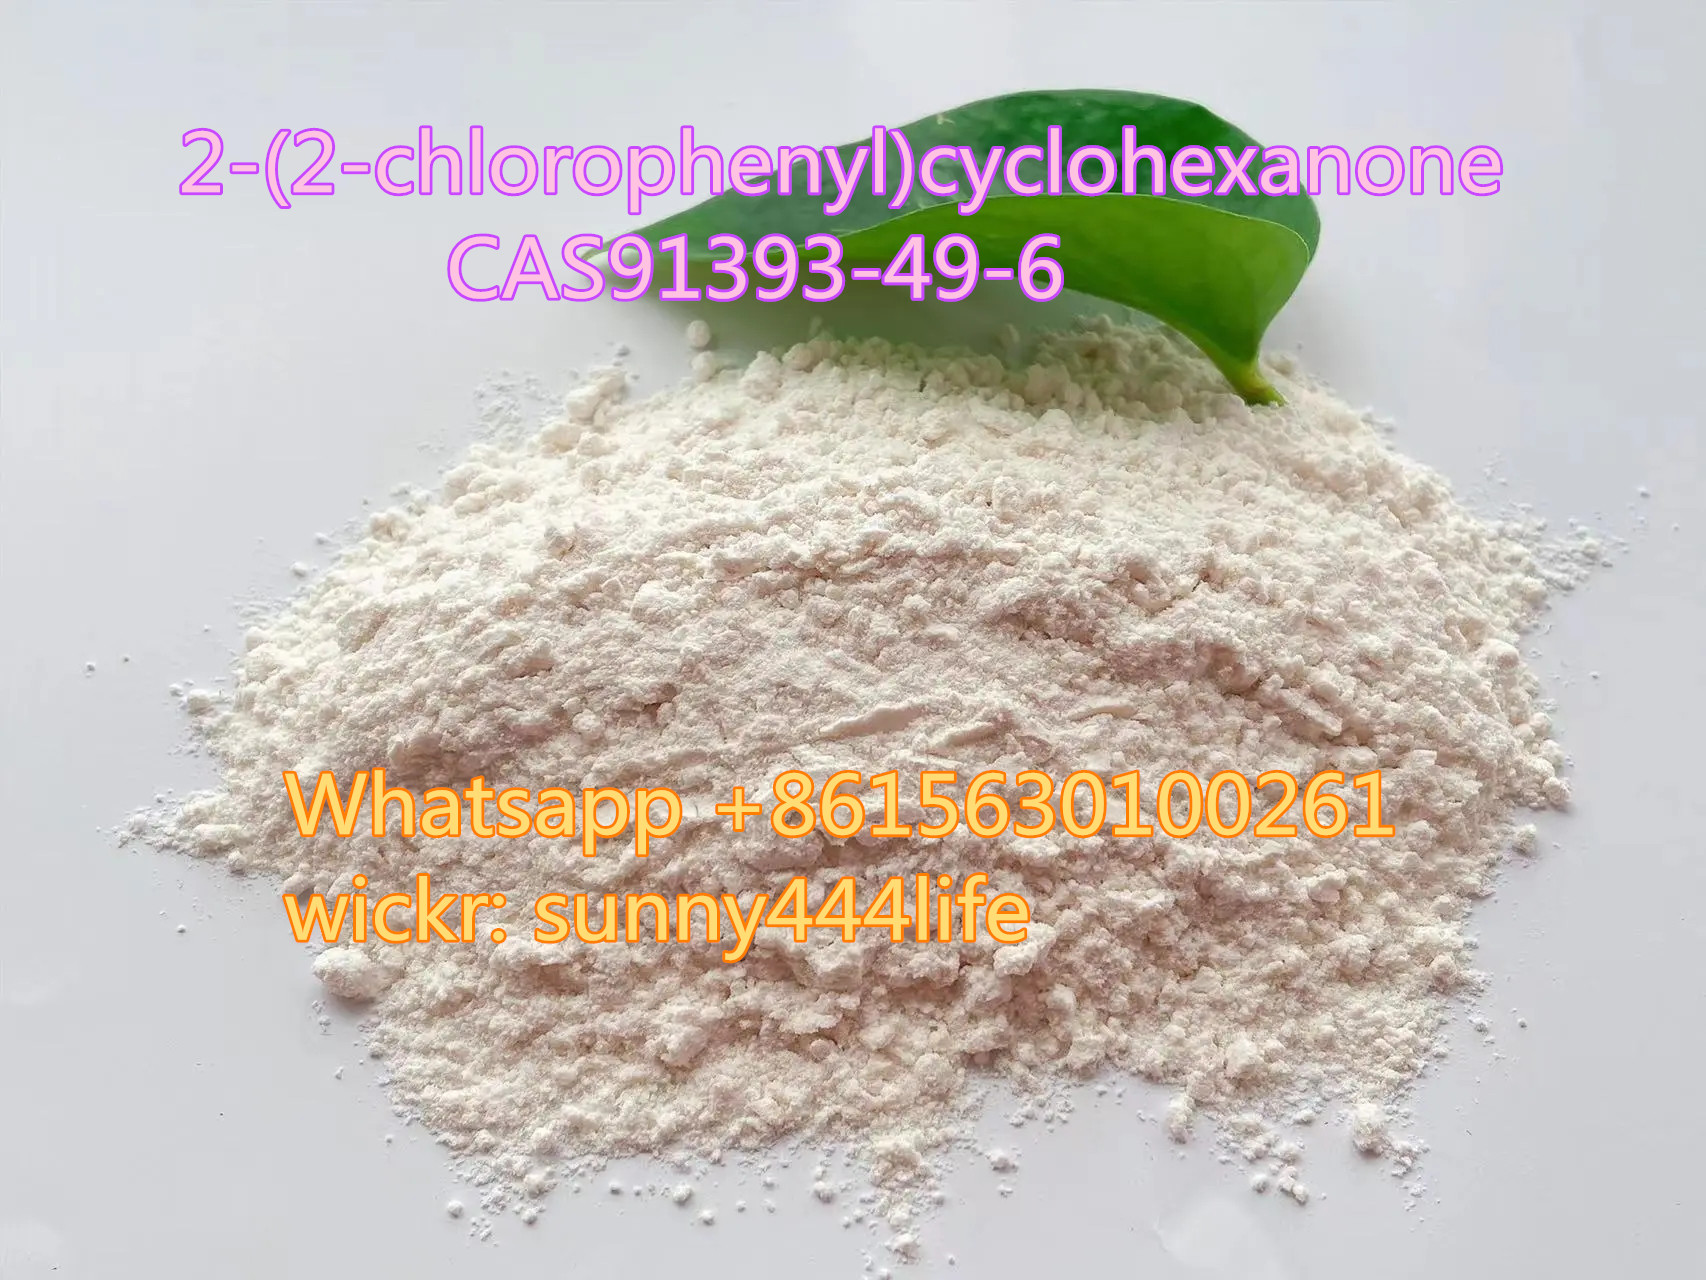 2-(2-chlorophenyl)cyclohexanone CAS91393-49-6 chemical liquid  - photo